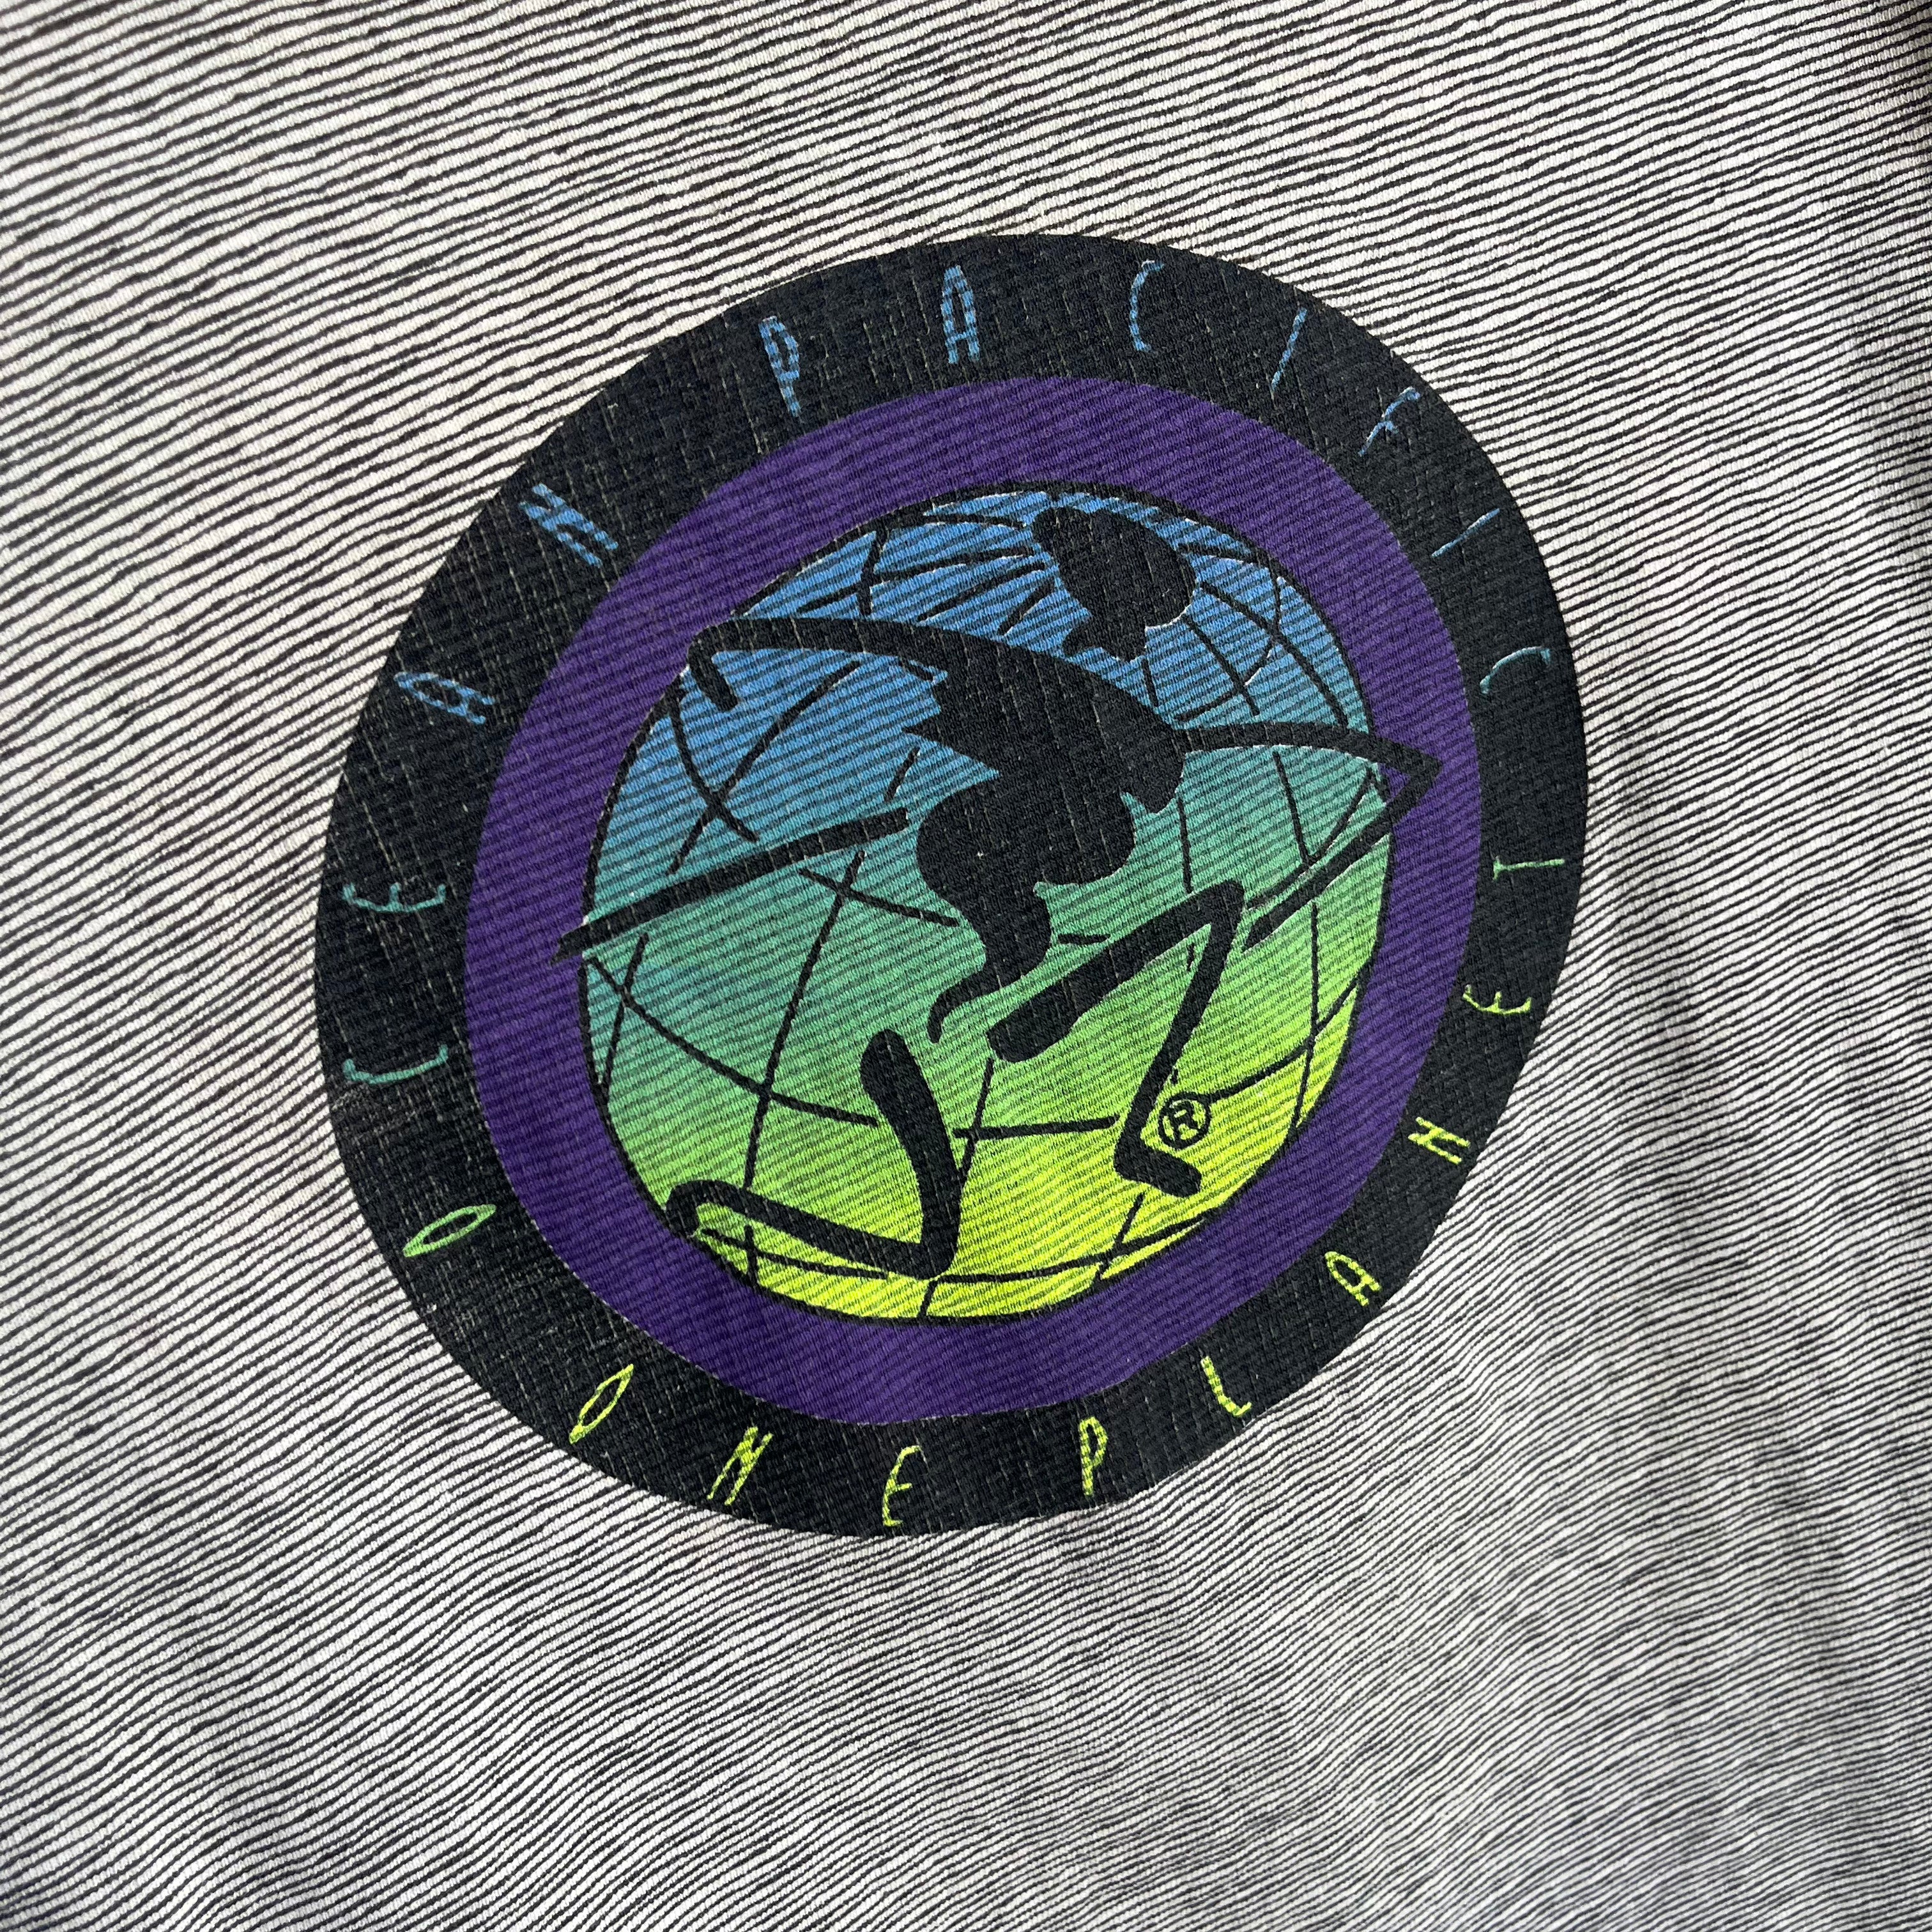 1980s Ocean Pacific Slightly Mocked Neck T-Shirt